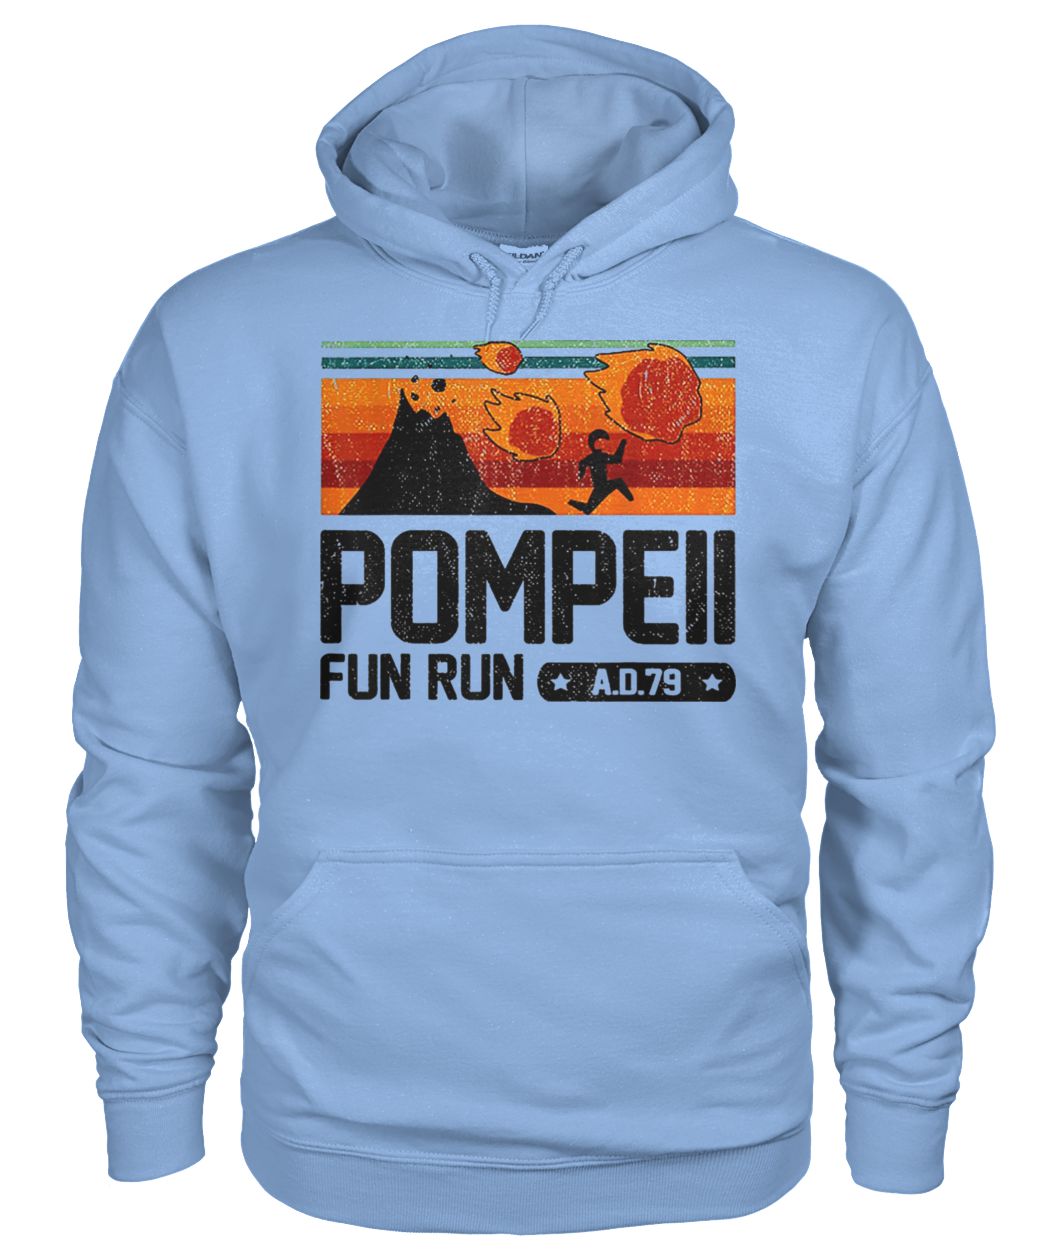 Vintage pompeii fun run AD 79 gildan hoodie